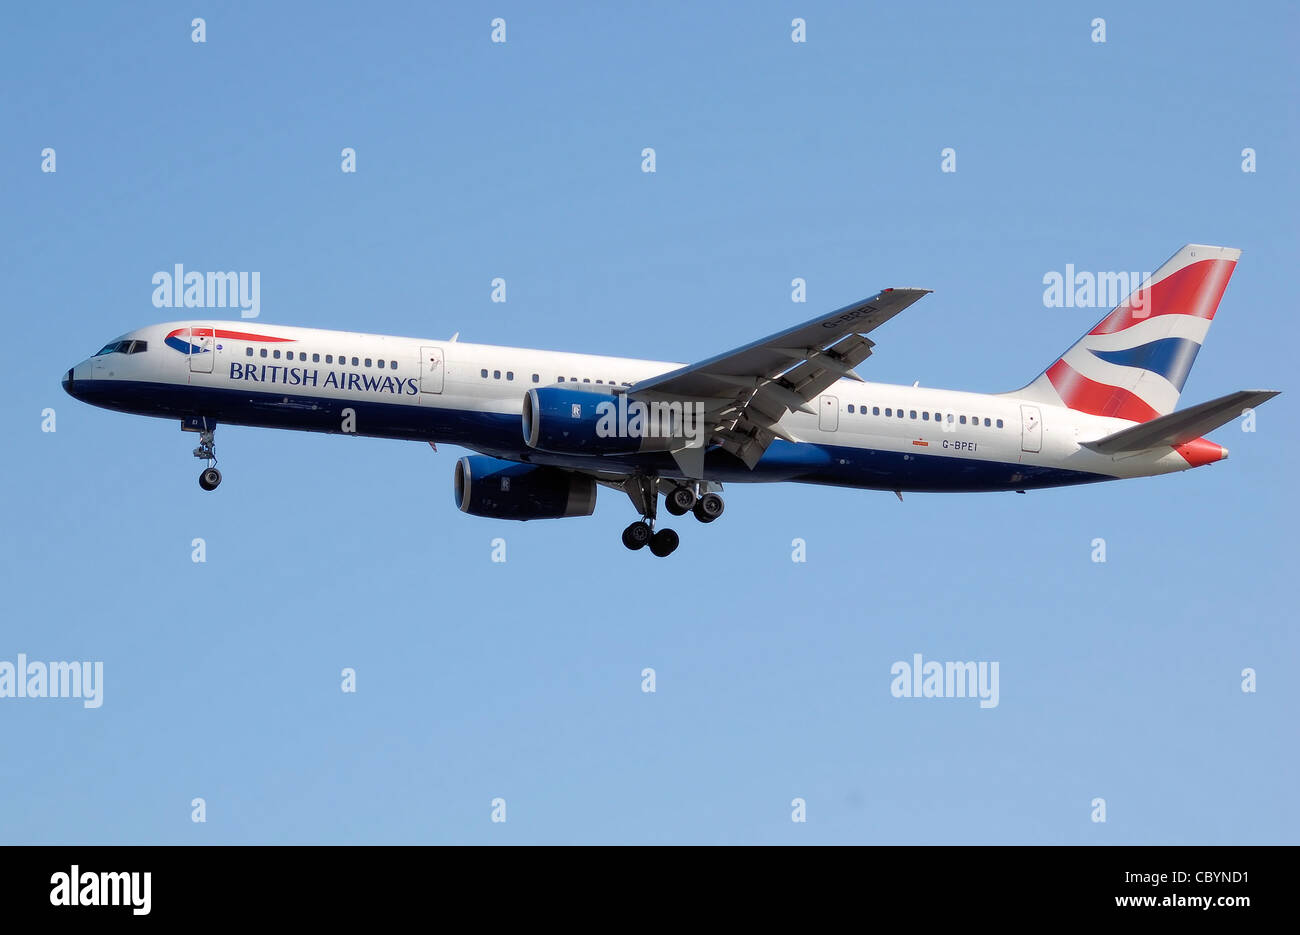 British Airways Boeing 757-200 (G-BPEI) lands at London Heathrow Airport, England. Stock Photo